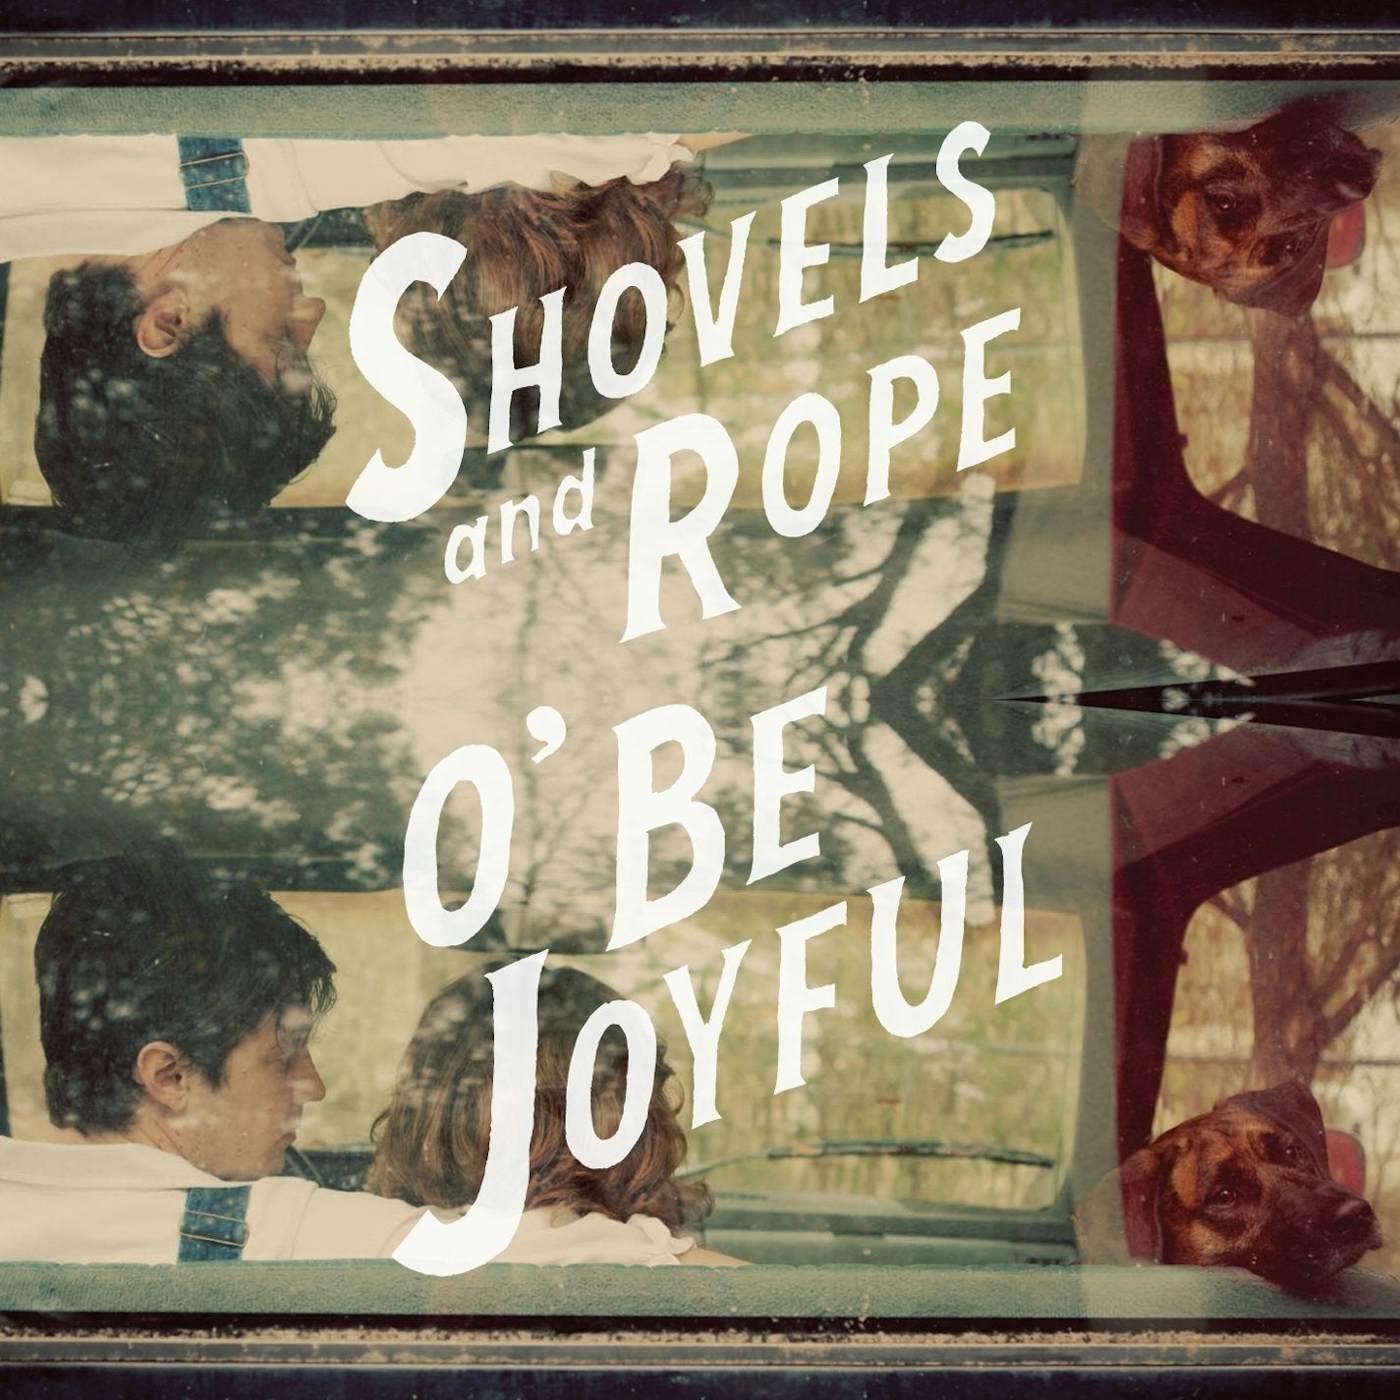 Shovels & Rope O' Be Joyful [Limited Pale Yellow]